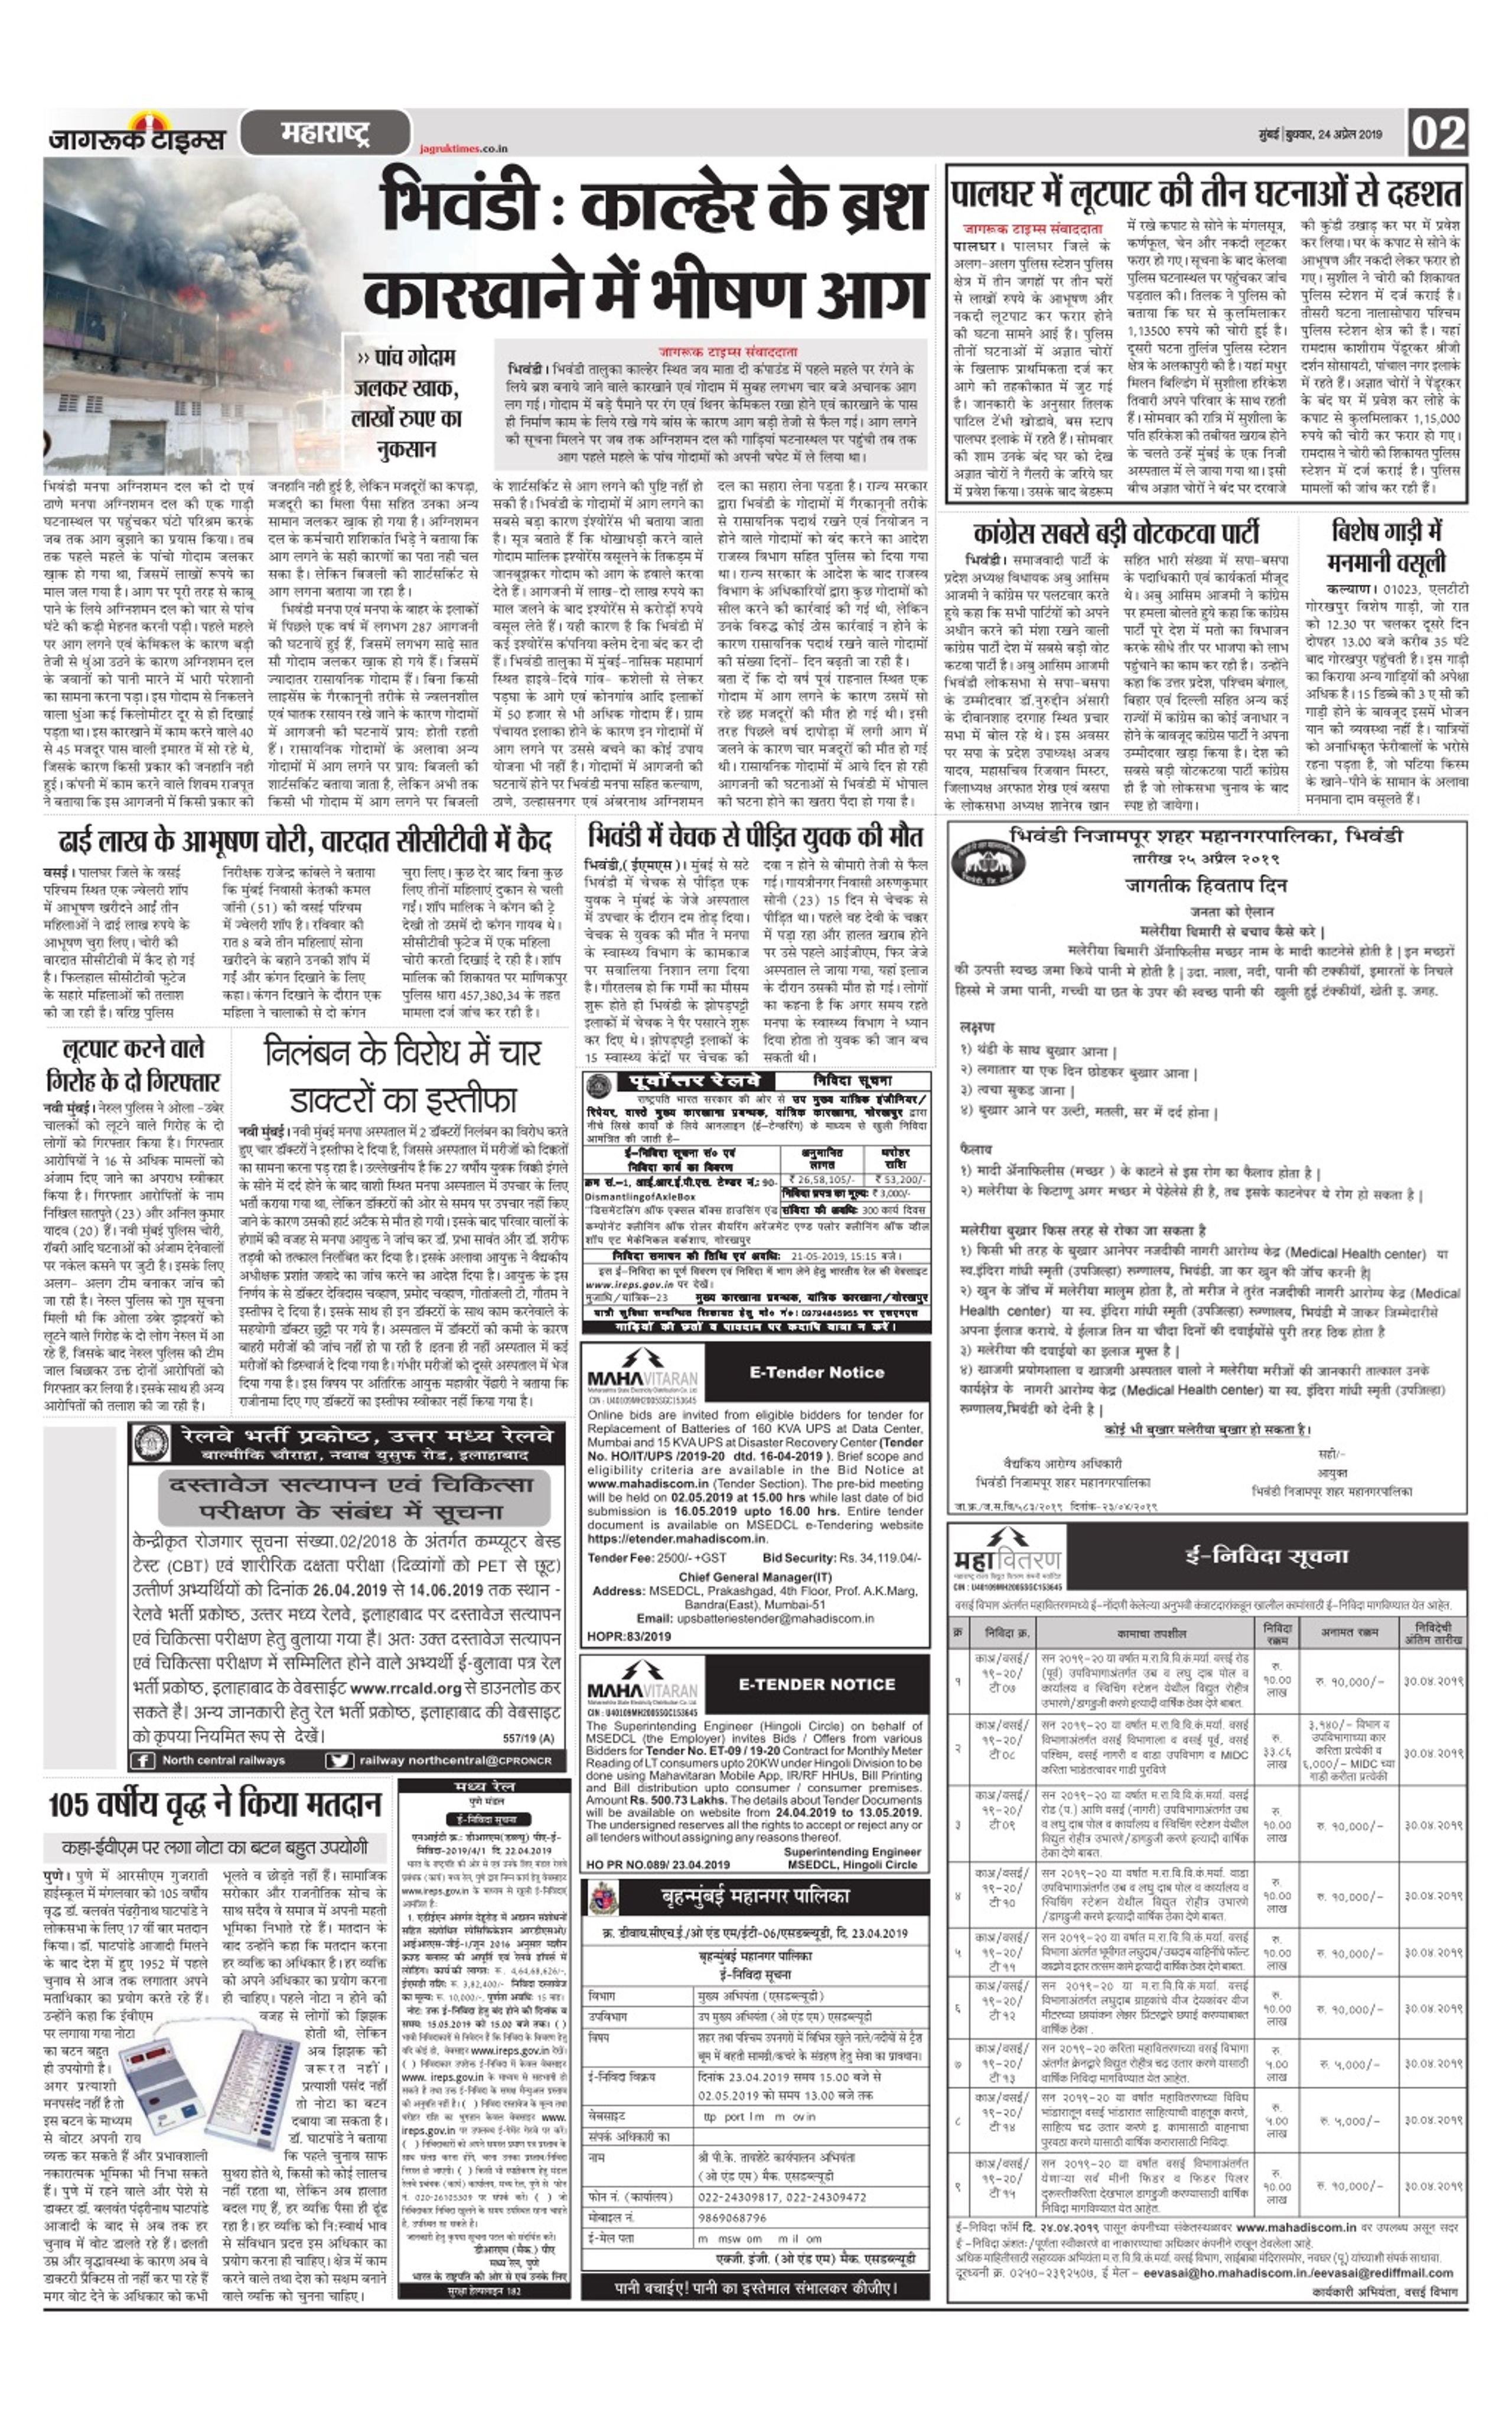 Ppt Hindi News E Paper 24 4 19 Jagruktimes Powerpoint Presentation Id